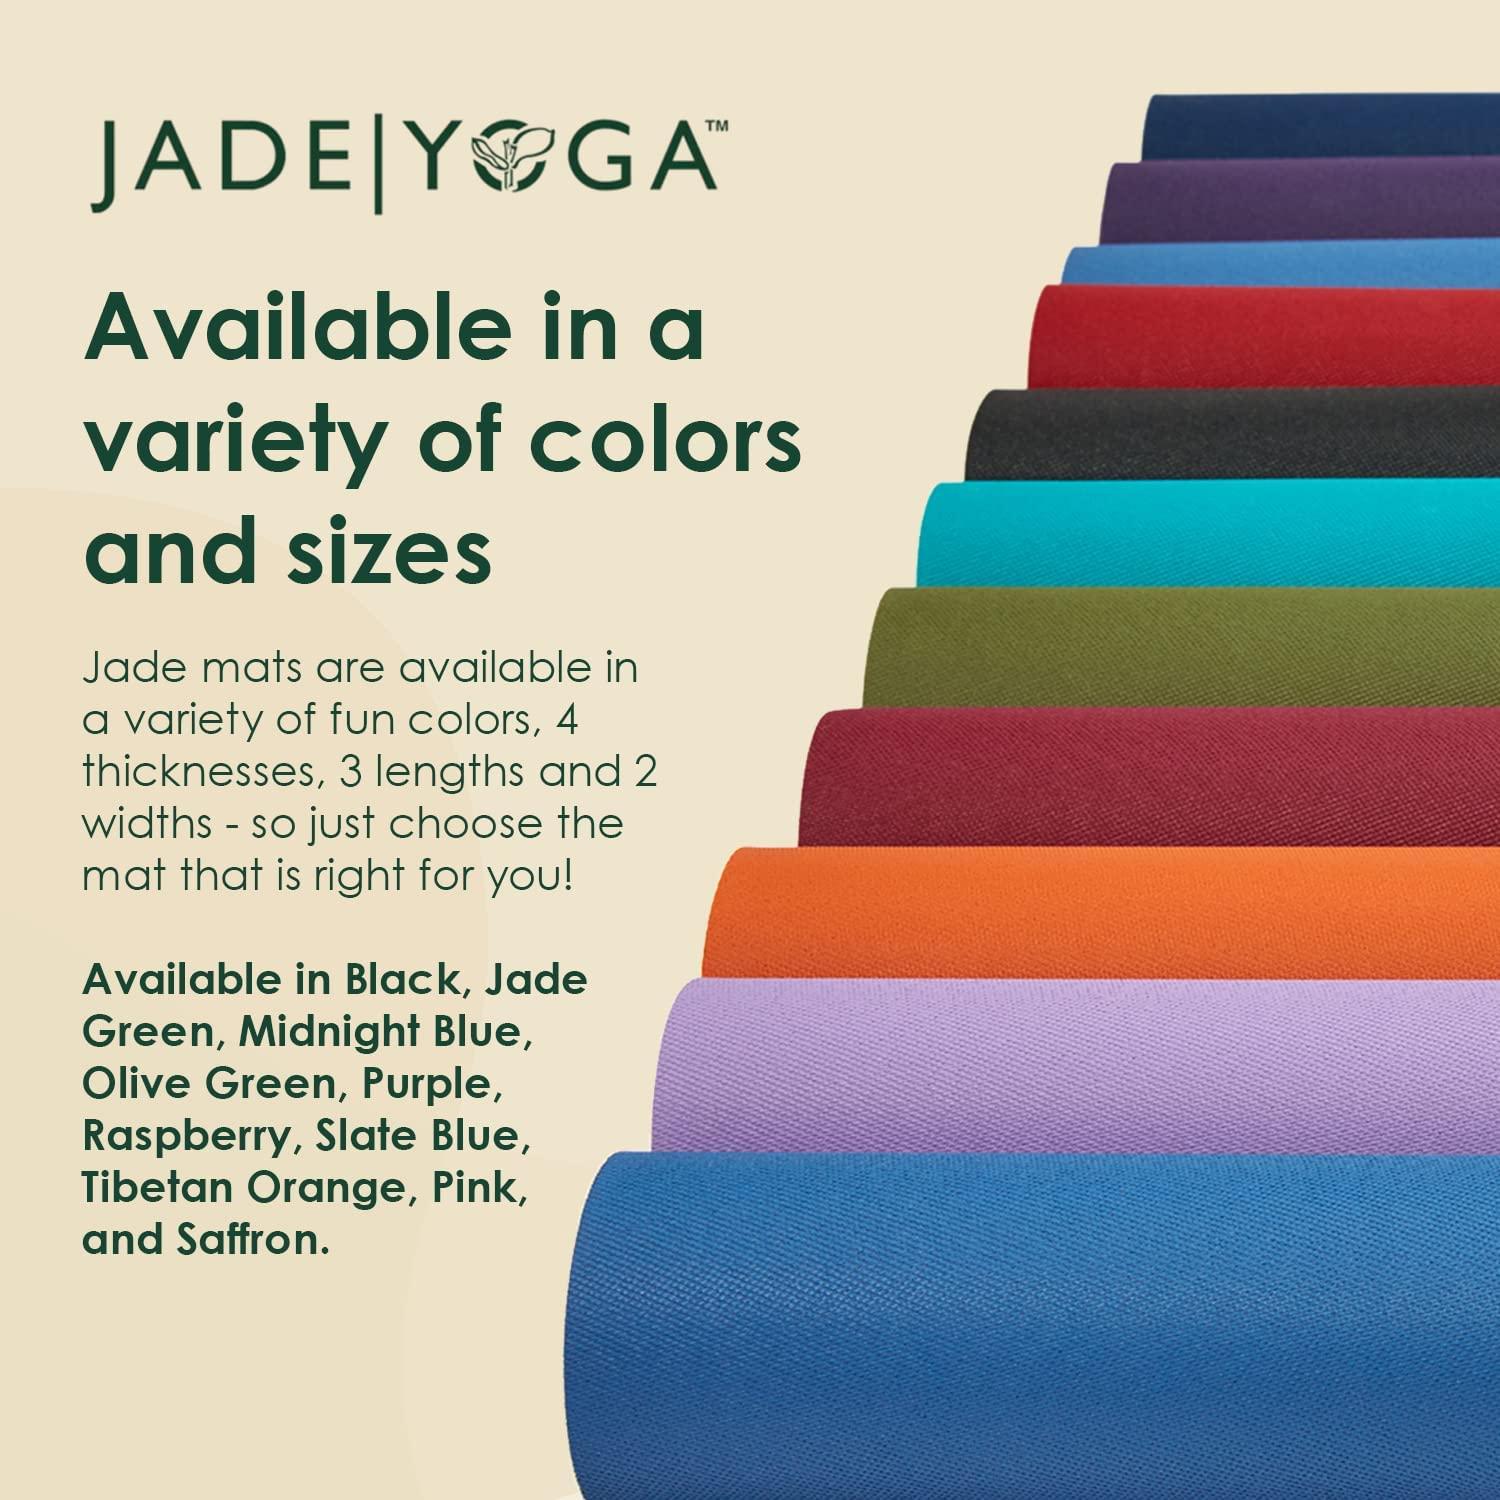 Jade Harmony 3/16 x 24 x 74 Midnight Blue Yoga Mat, Mats -  Canada